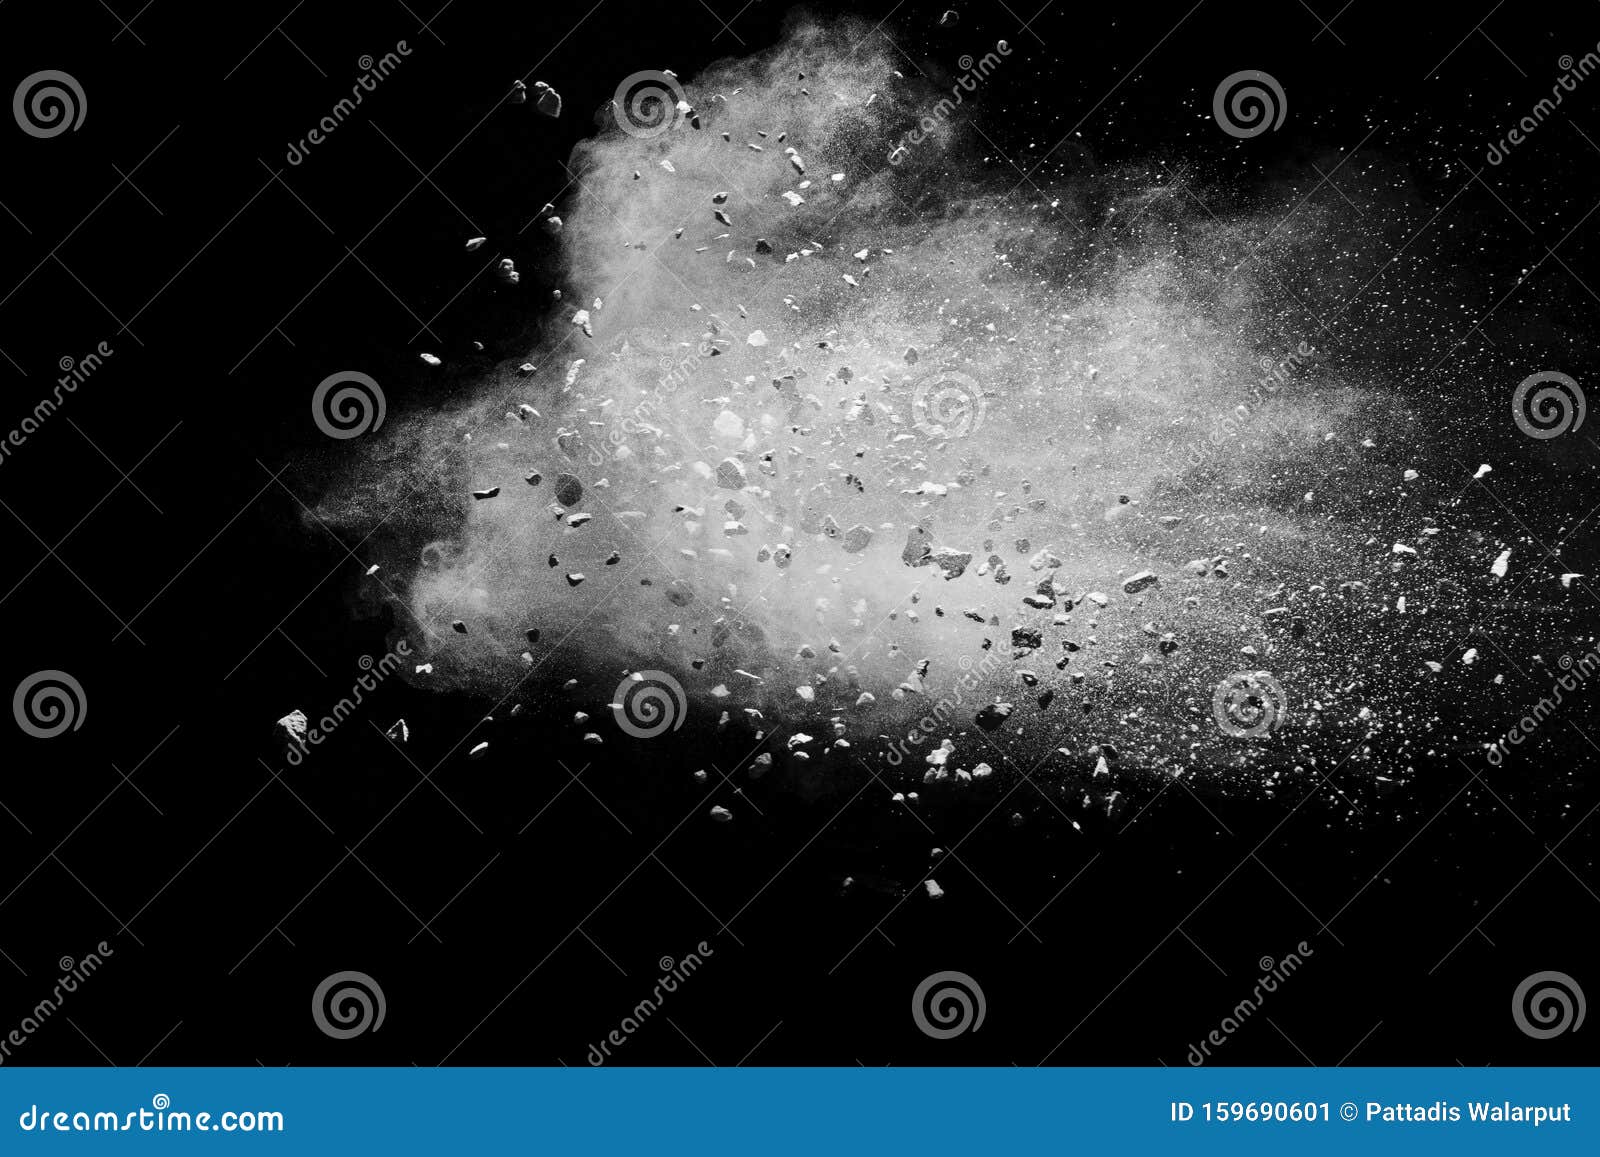 split debris of stone exploding with white powder against black background